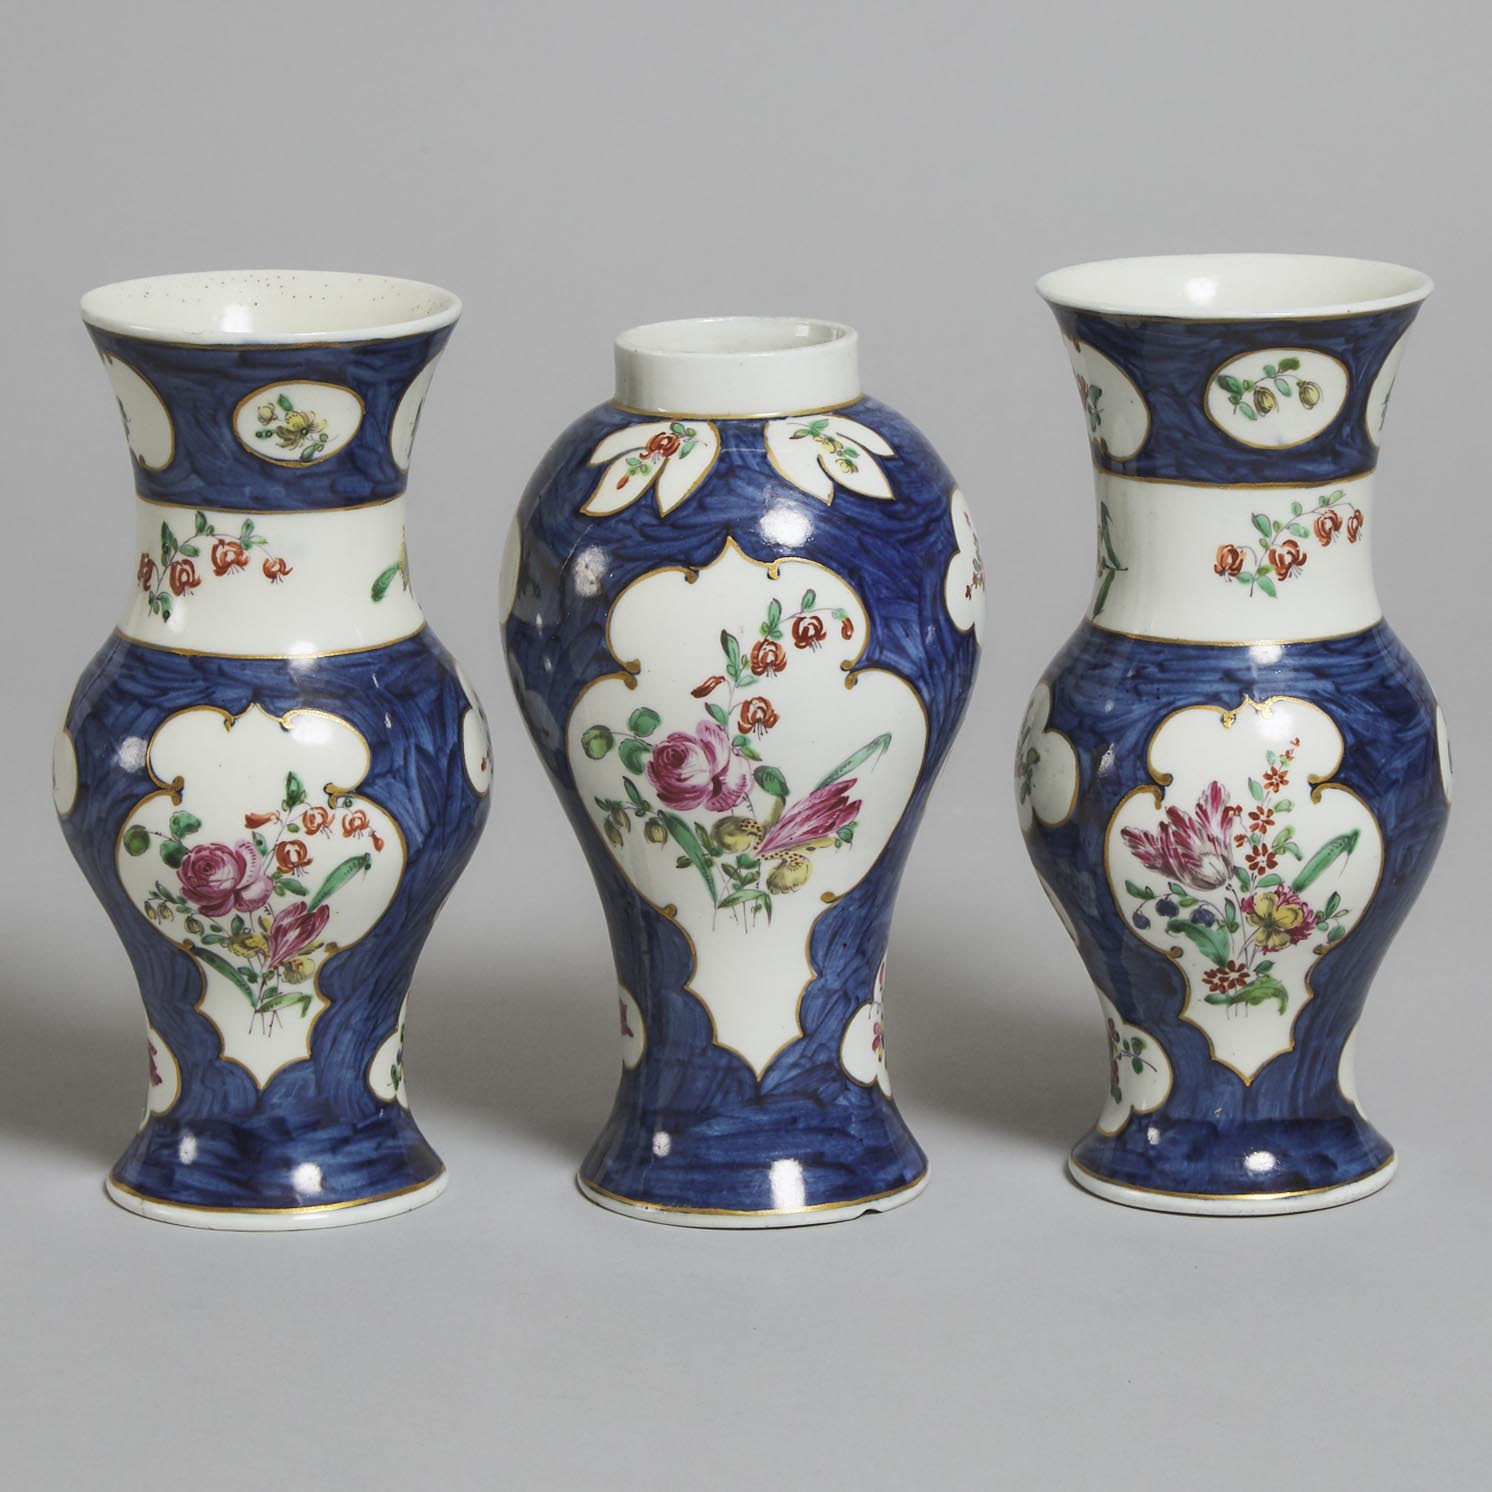 Garniture of Three Christian's Liverpool Blue Ground Vases, c.1770